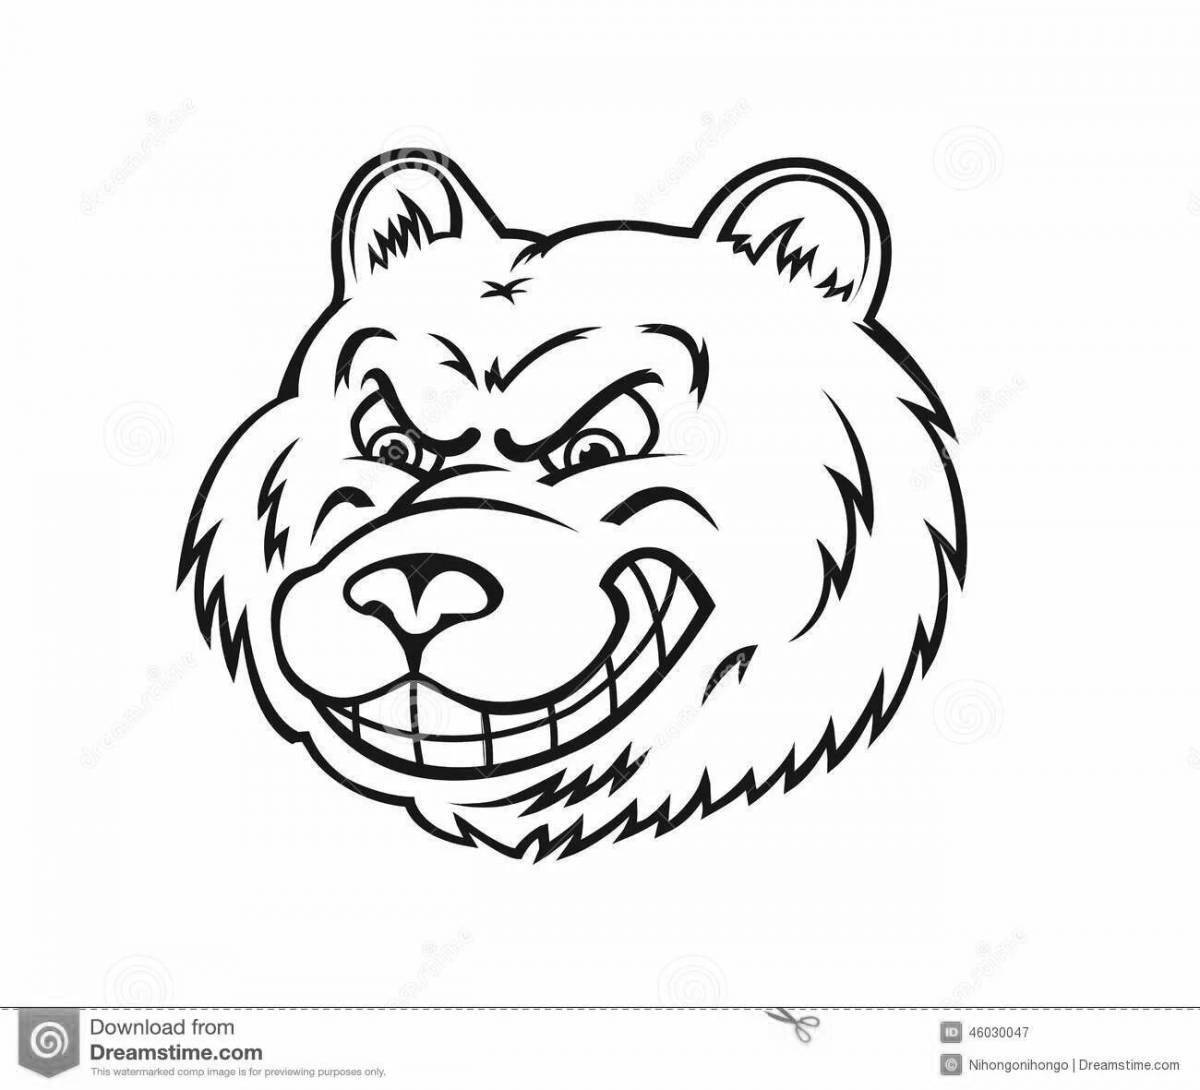 Naughty bear face coloring book